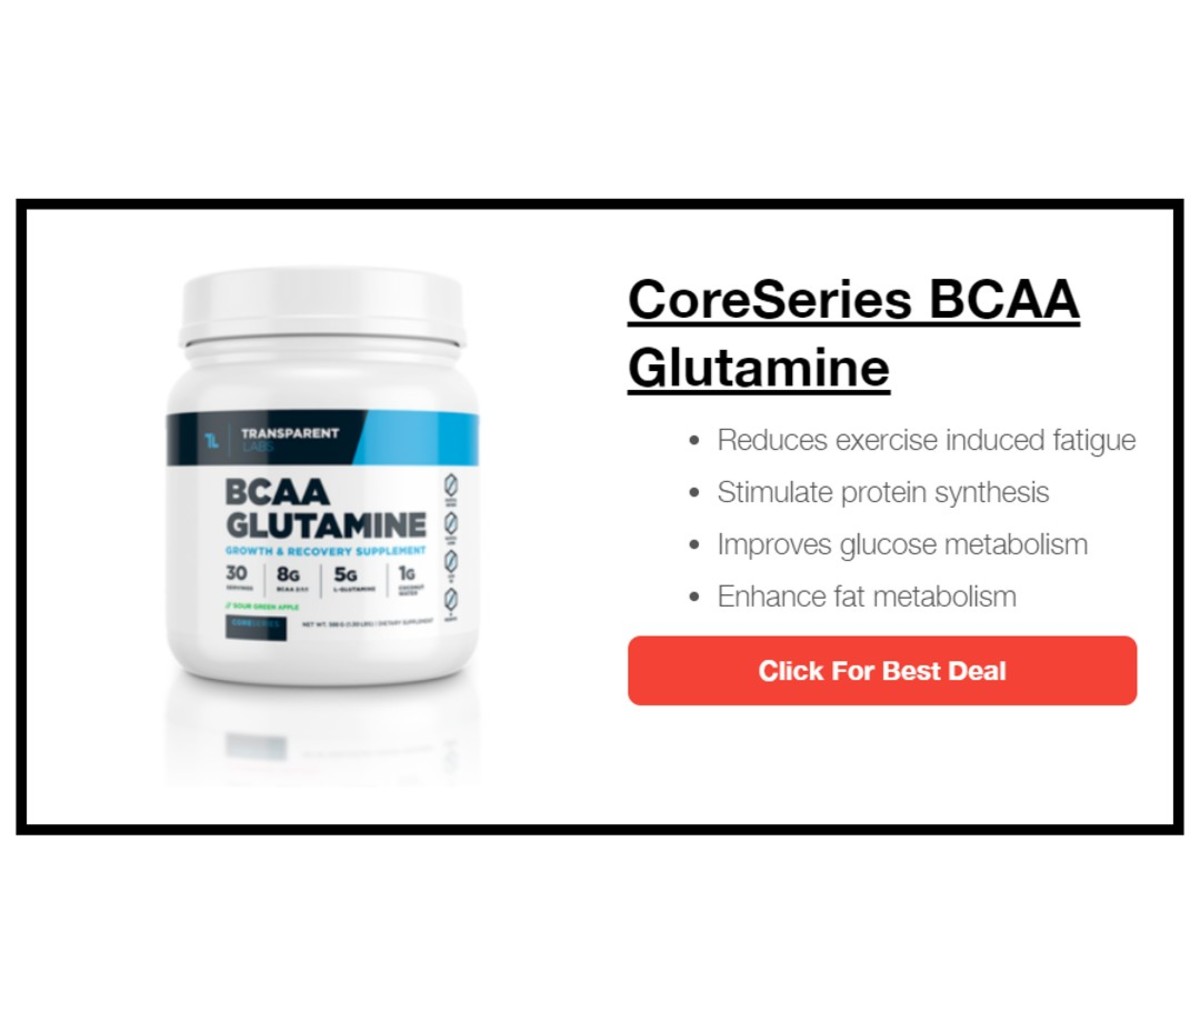 CoreSeries BCAA Glutamine